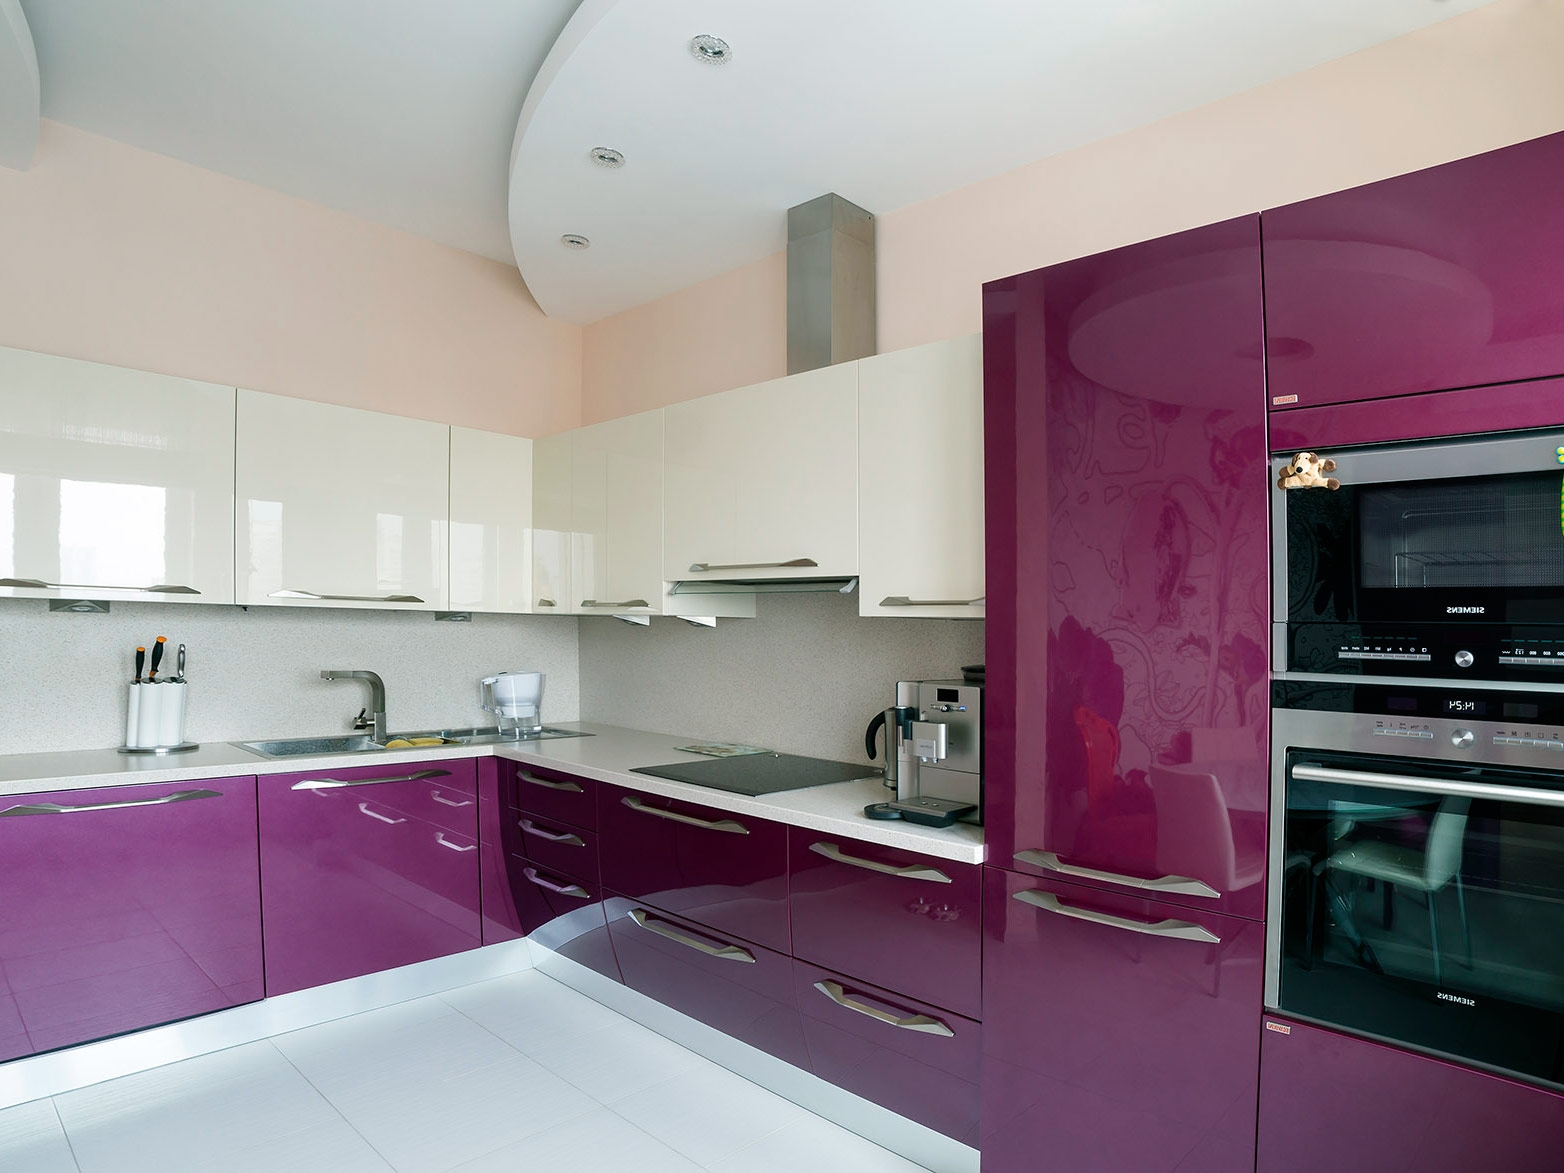 unusual kitchen decor in purple tint